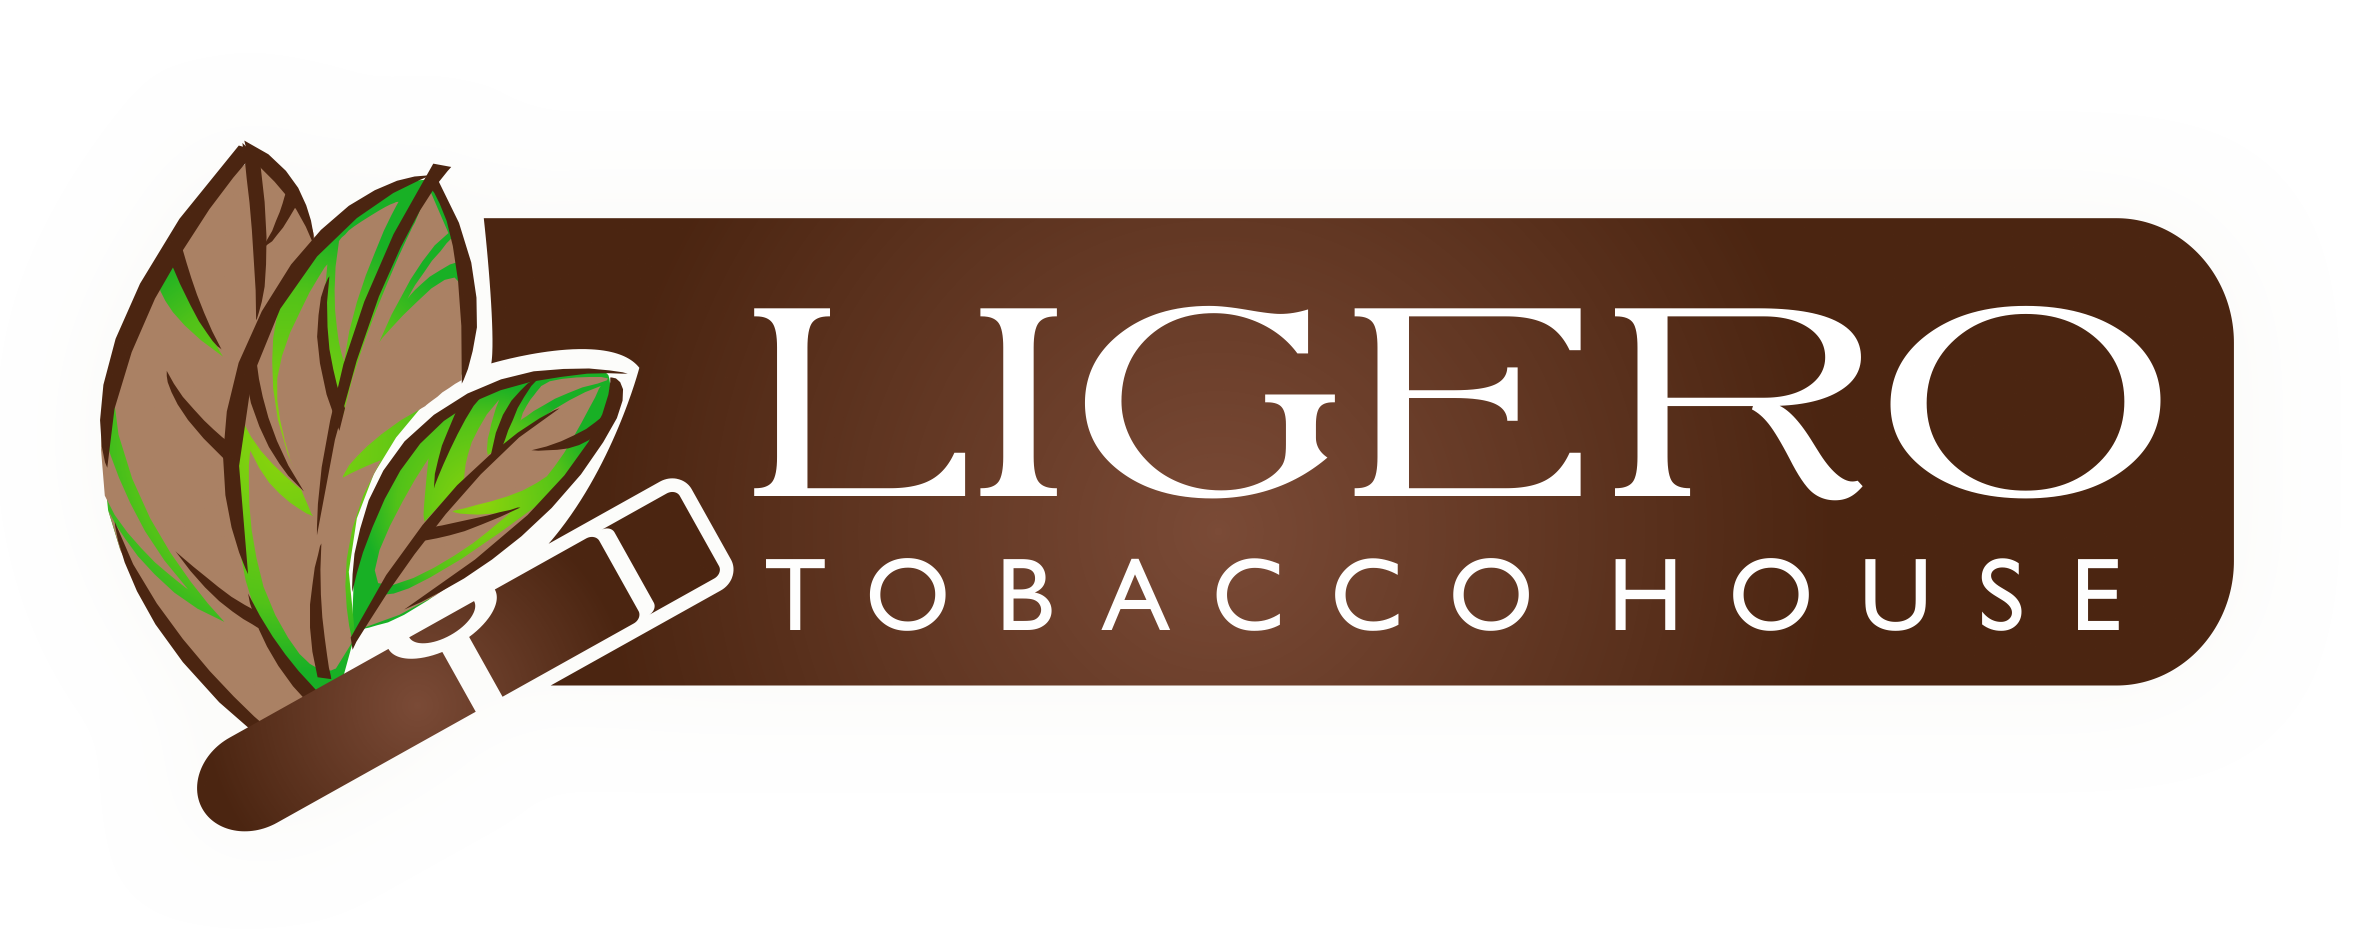 Ligero Tobacco House